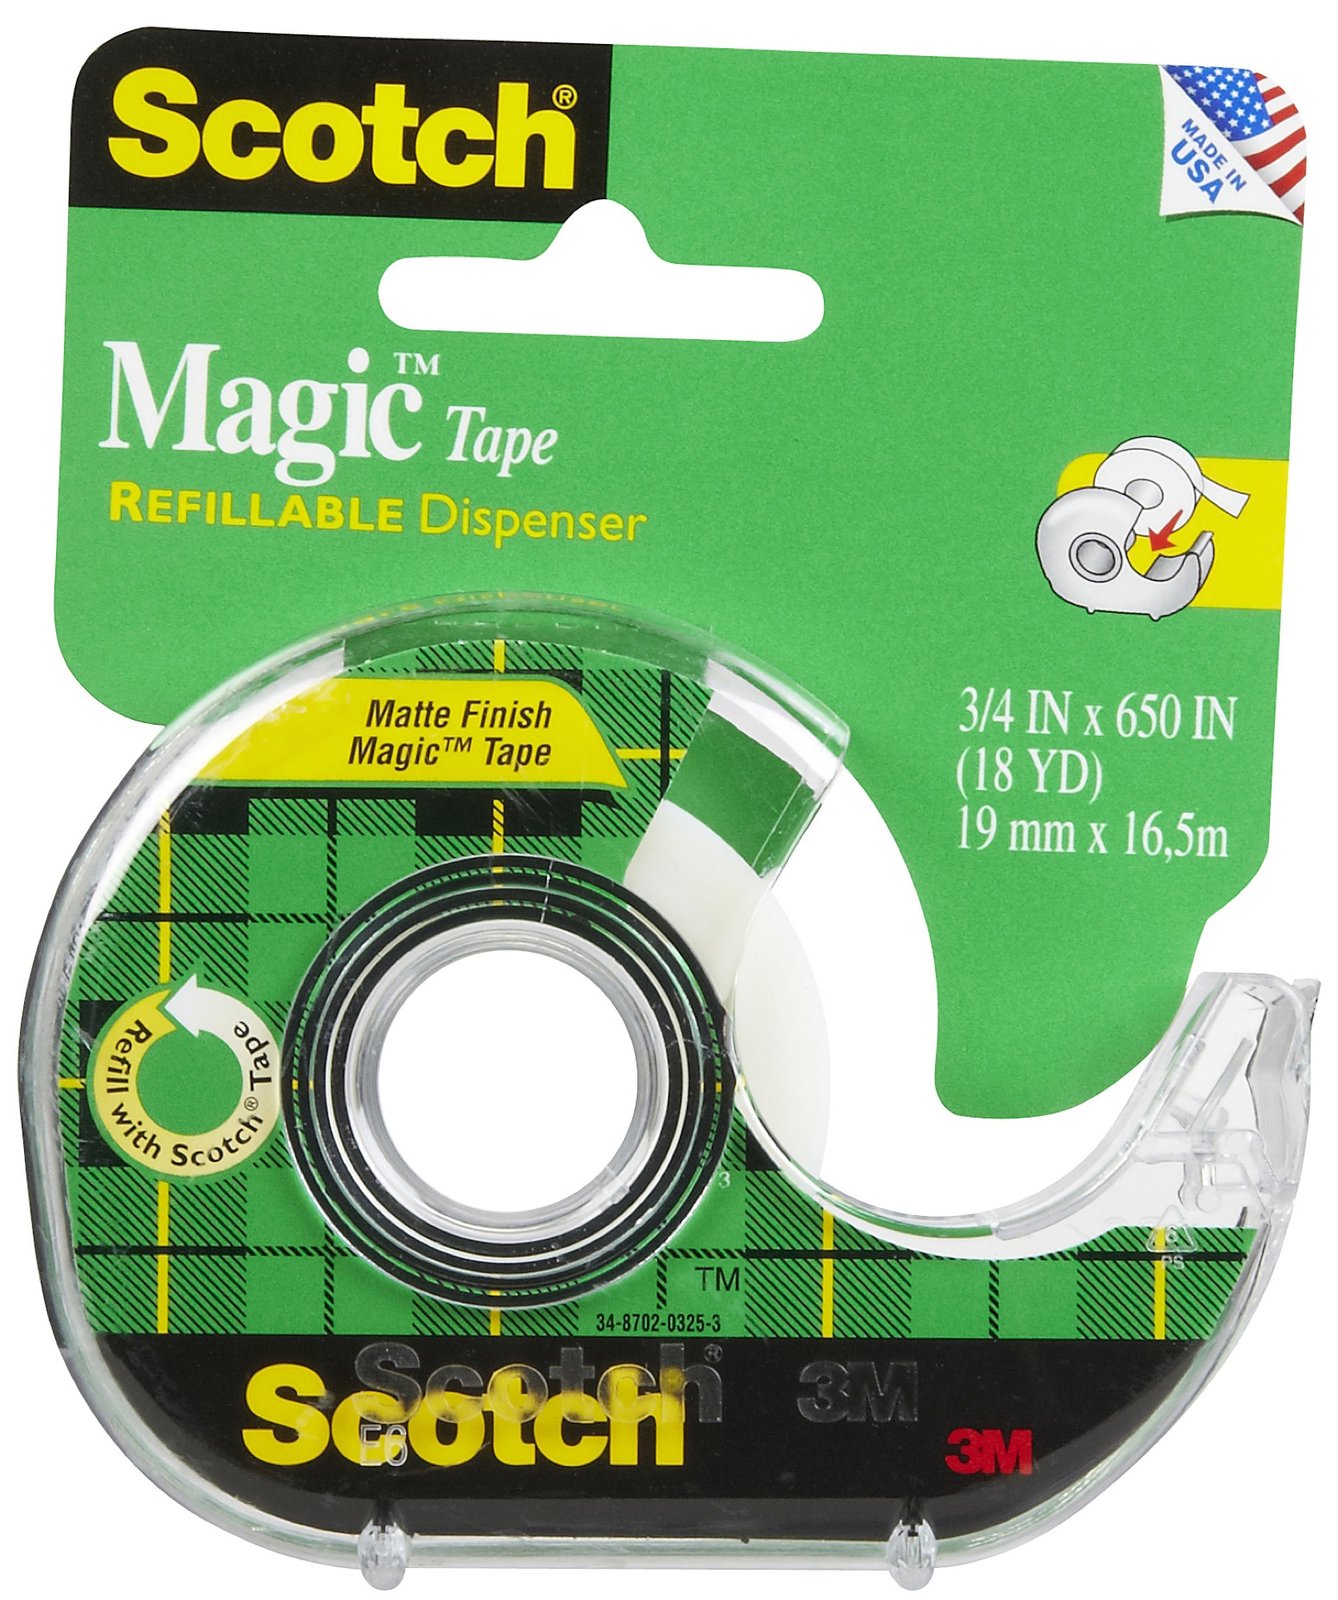 Scotch Brand Matt Finish Magic Tape 3/4 X 18 Yds.